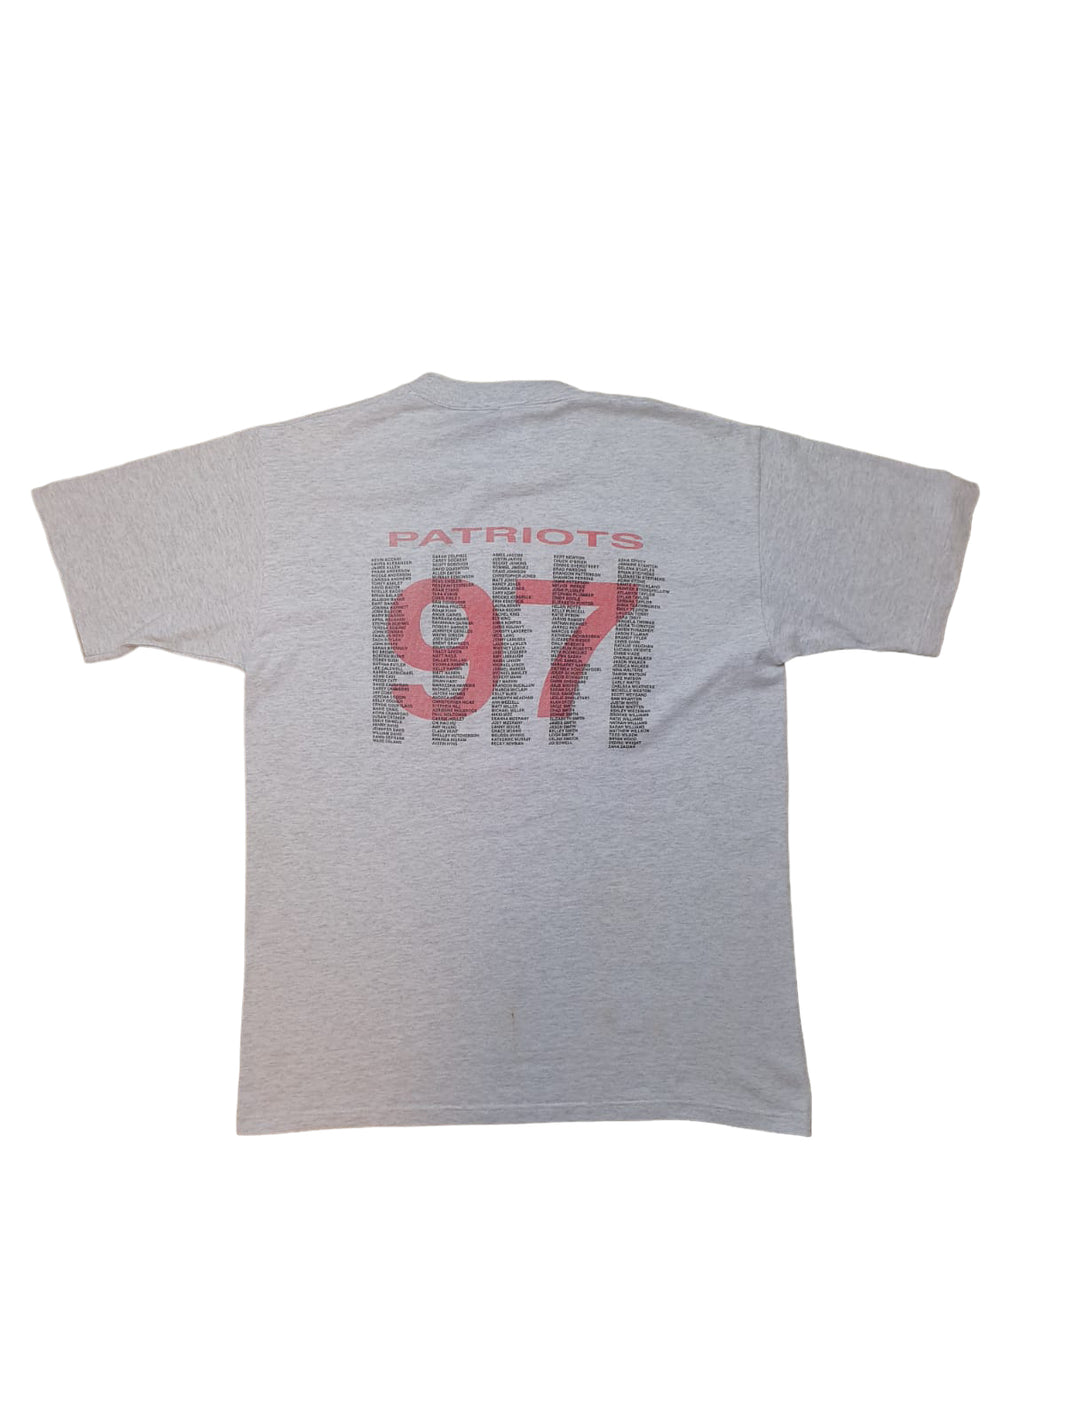 Vintage Shirt Single Stich 99s